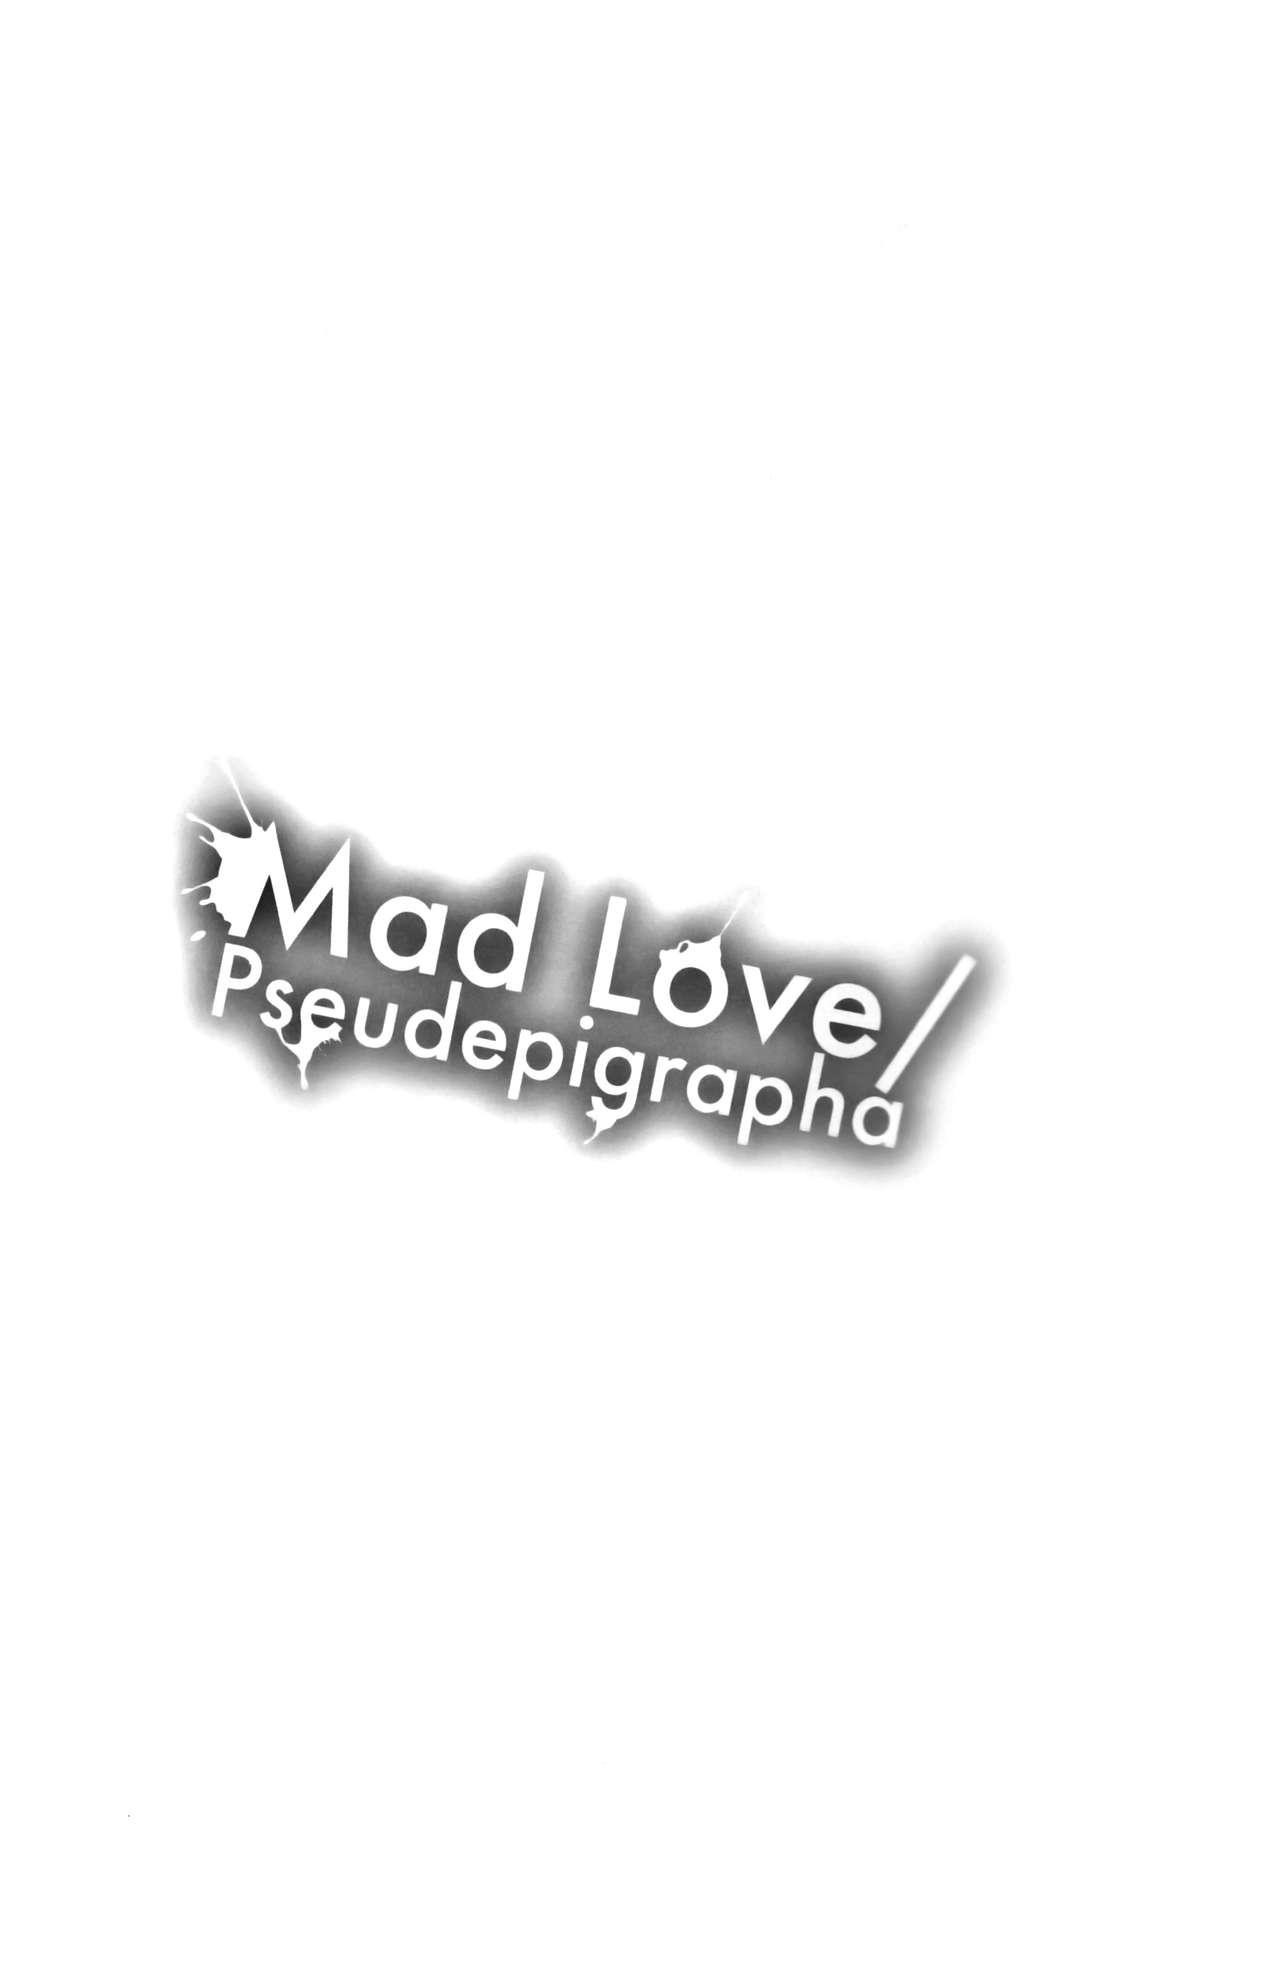 Mad Love/Pseudepigrapha 4